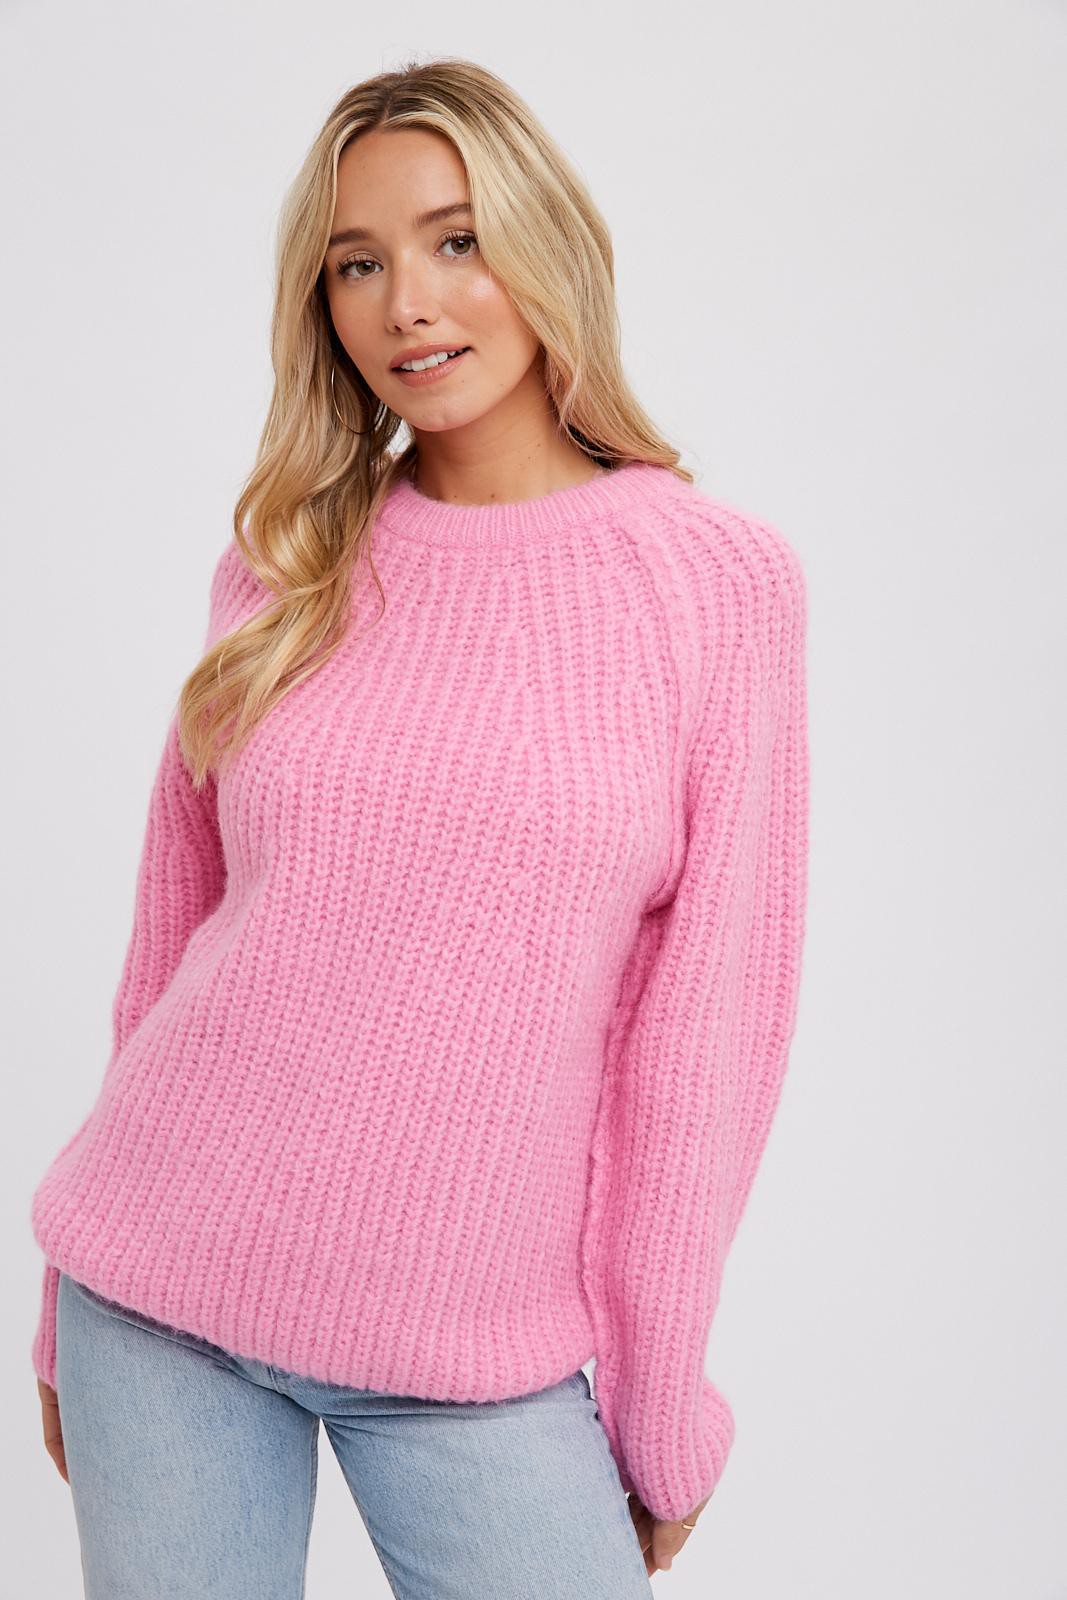 Sandwich, Sweaters, Sandwich Small Pale Pink Rolled Neck Sweater